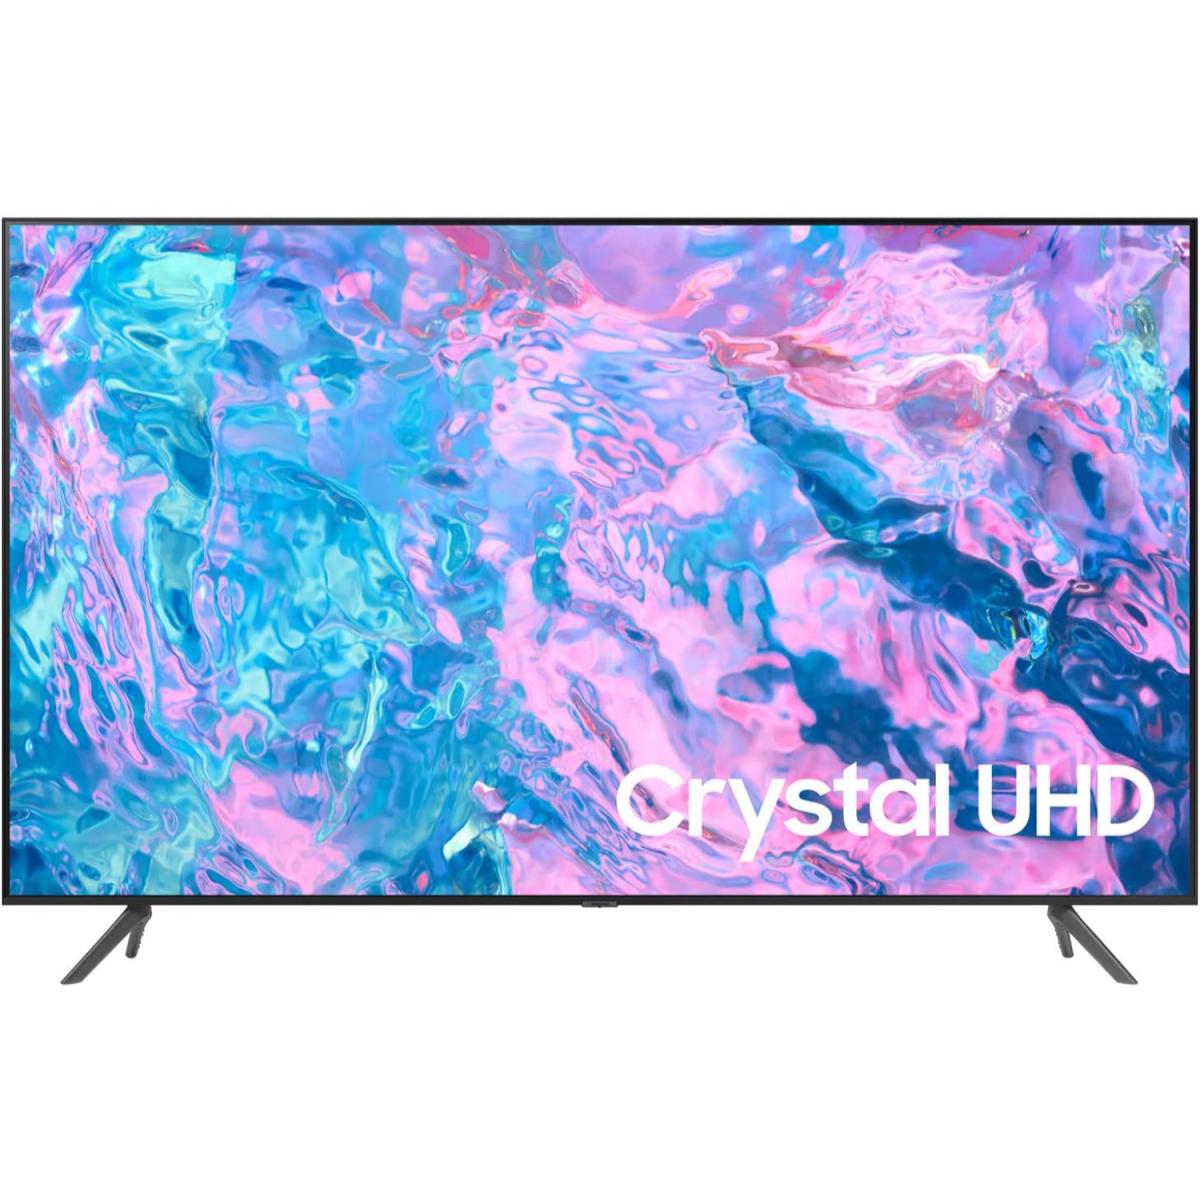 TV SAMSUNG LED 55" SMART CRYSTAL UHD